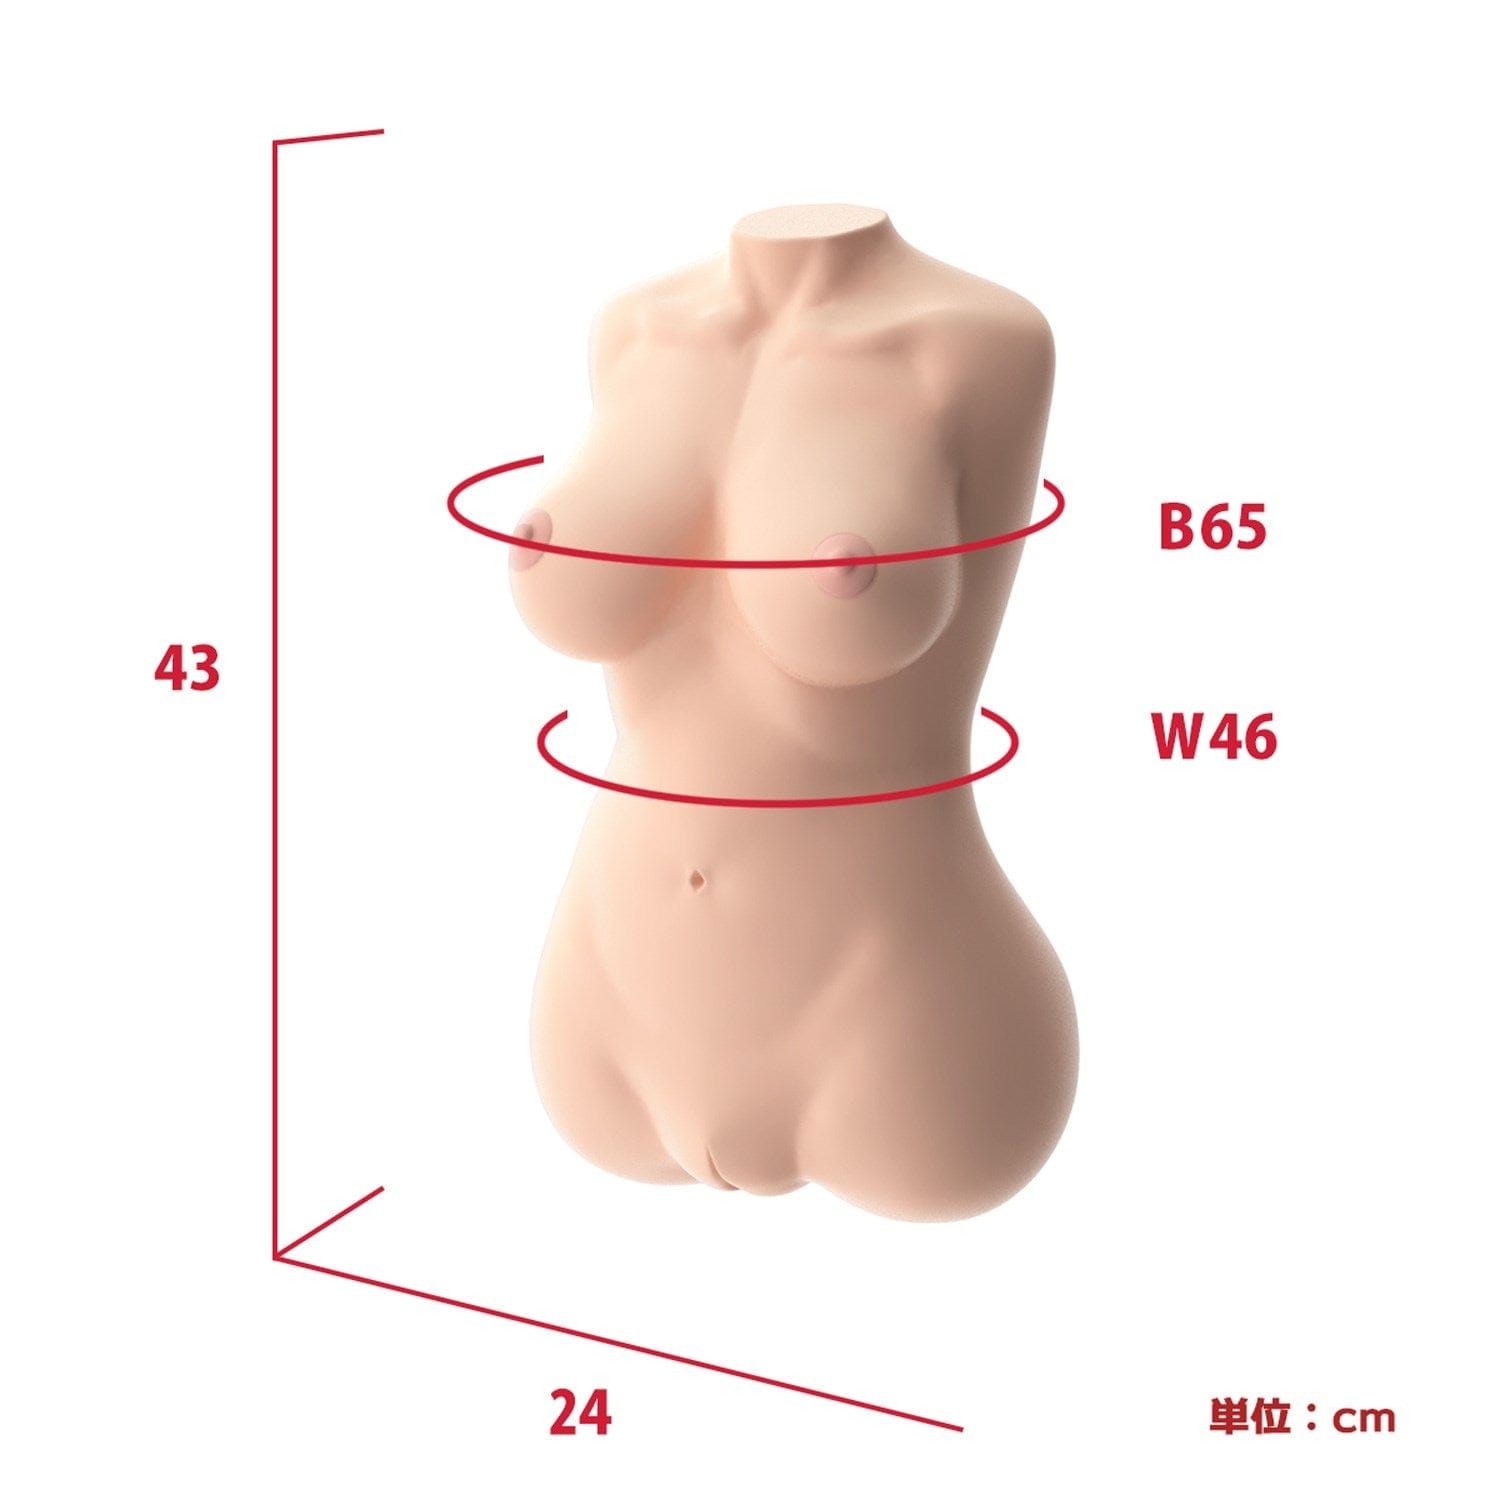 SSI Japan - Real Body 3D Bone System Magical Yawachichi Maria Nordahl Masturbator Doll 7kg Doll 4560344562832 CherryAffairs